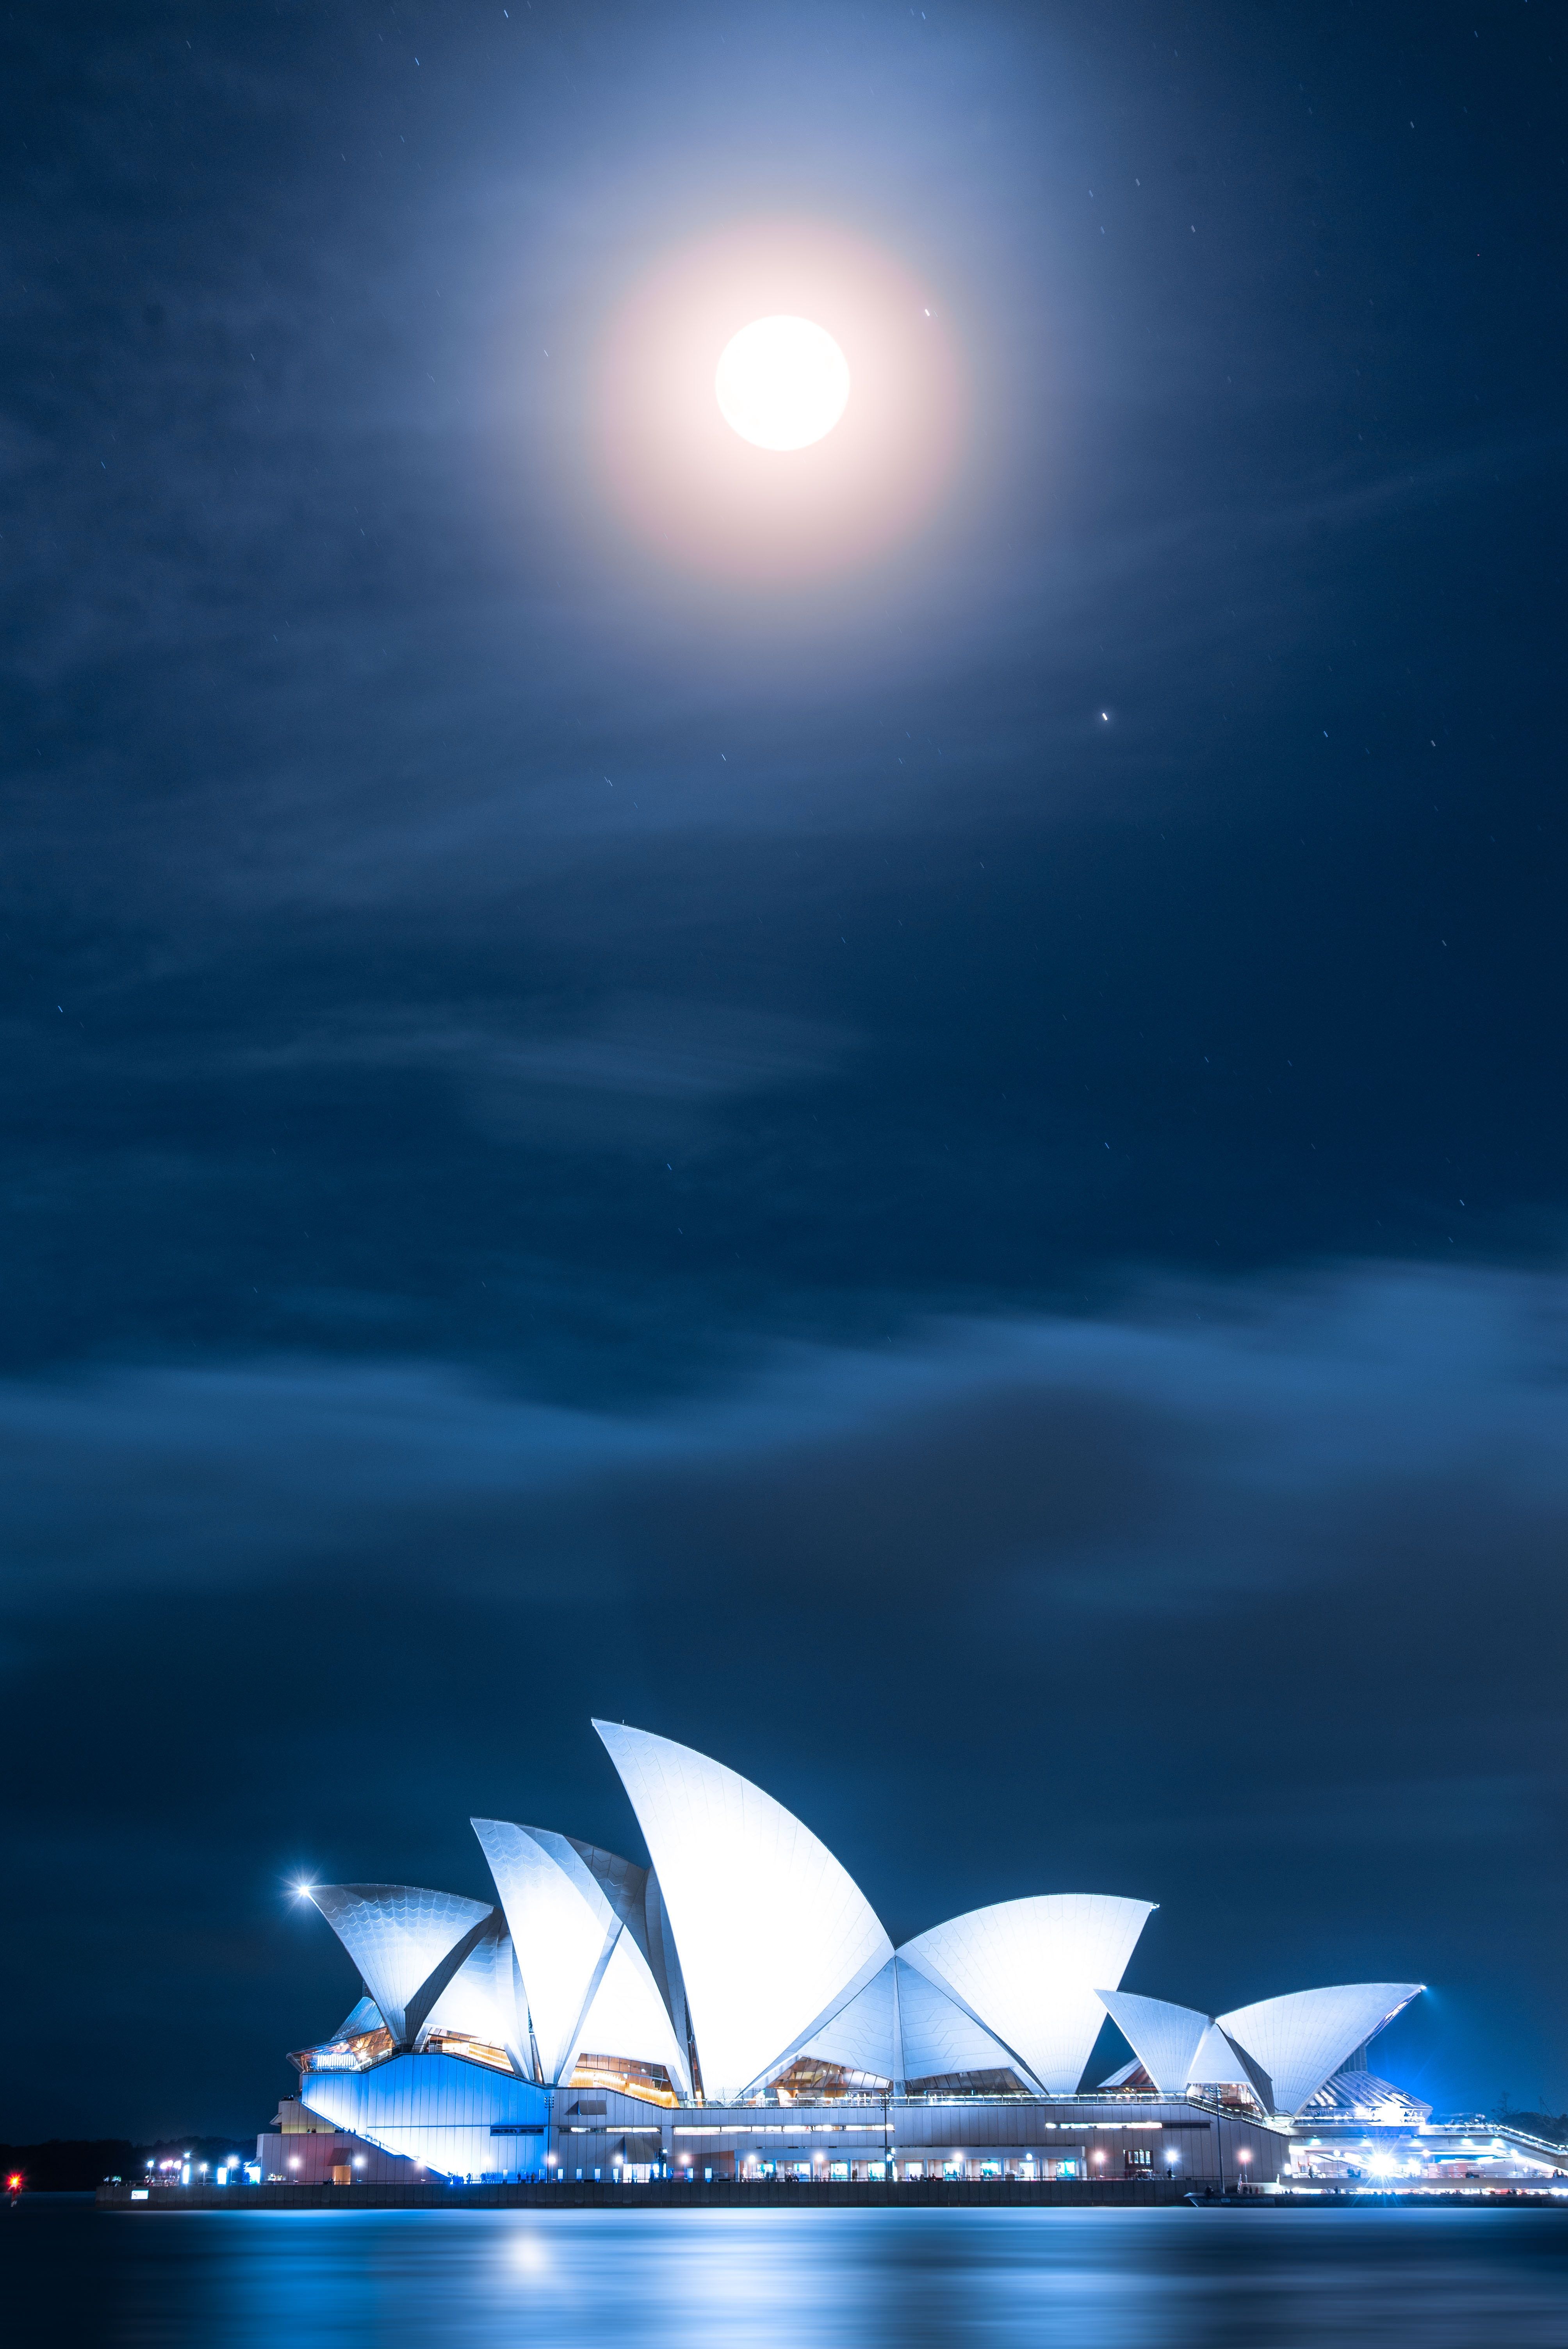 4016x6016 Photo Of Sydney Opera House At Night Free Stock Photo